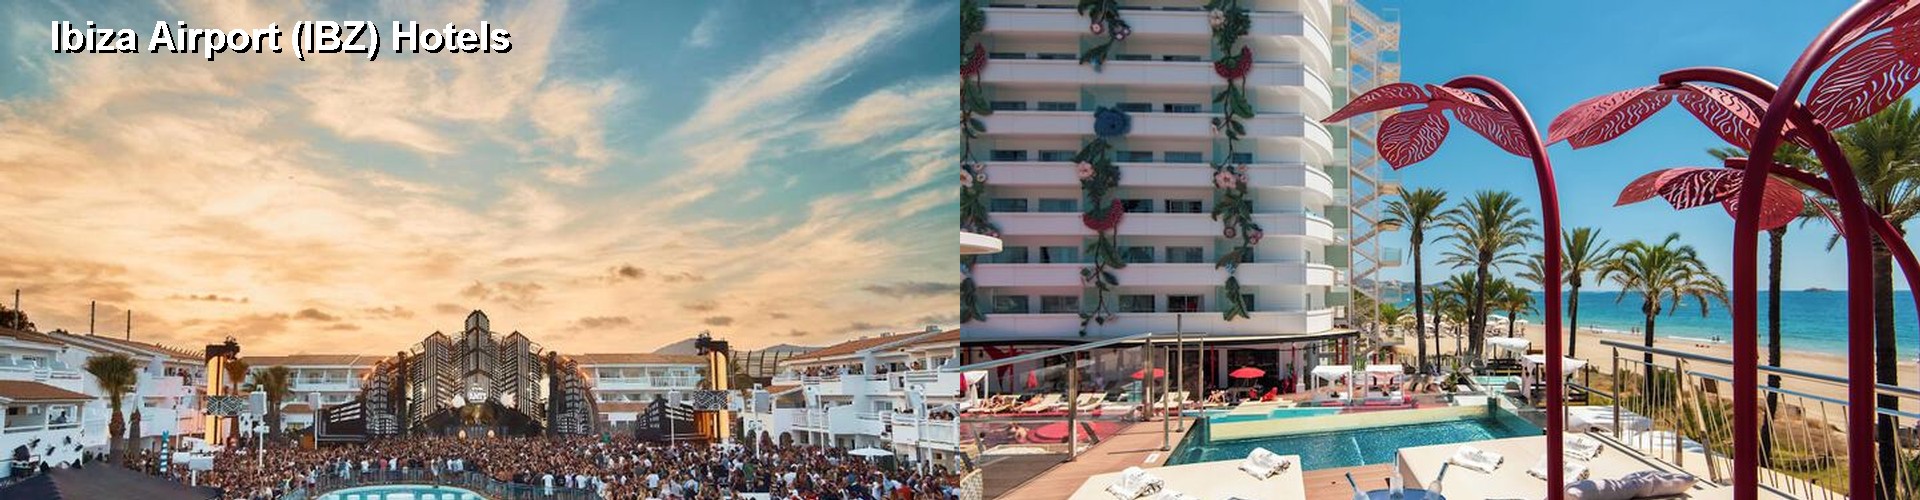 5 Best Hotels near Ibiza Airport (IBZ)